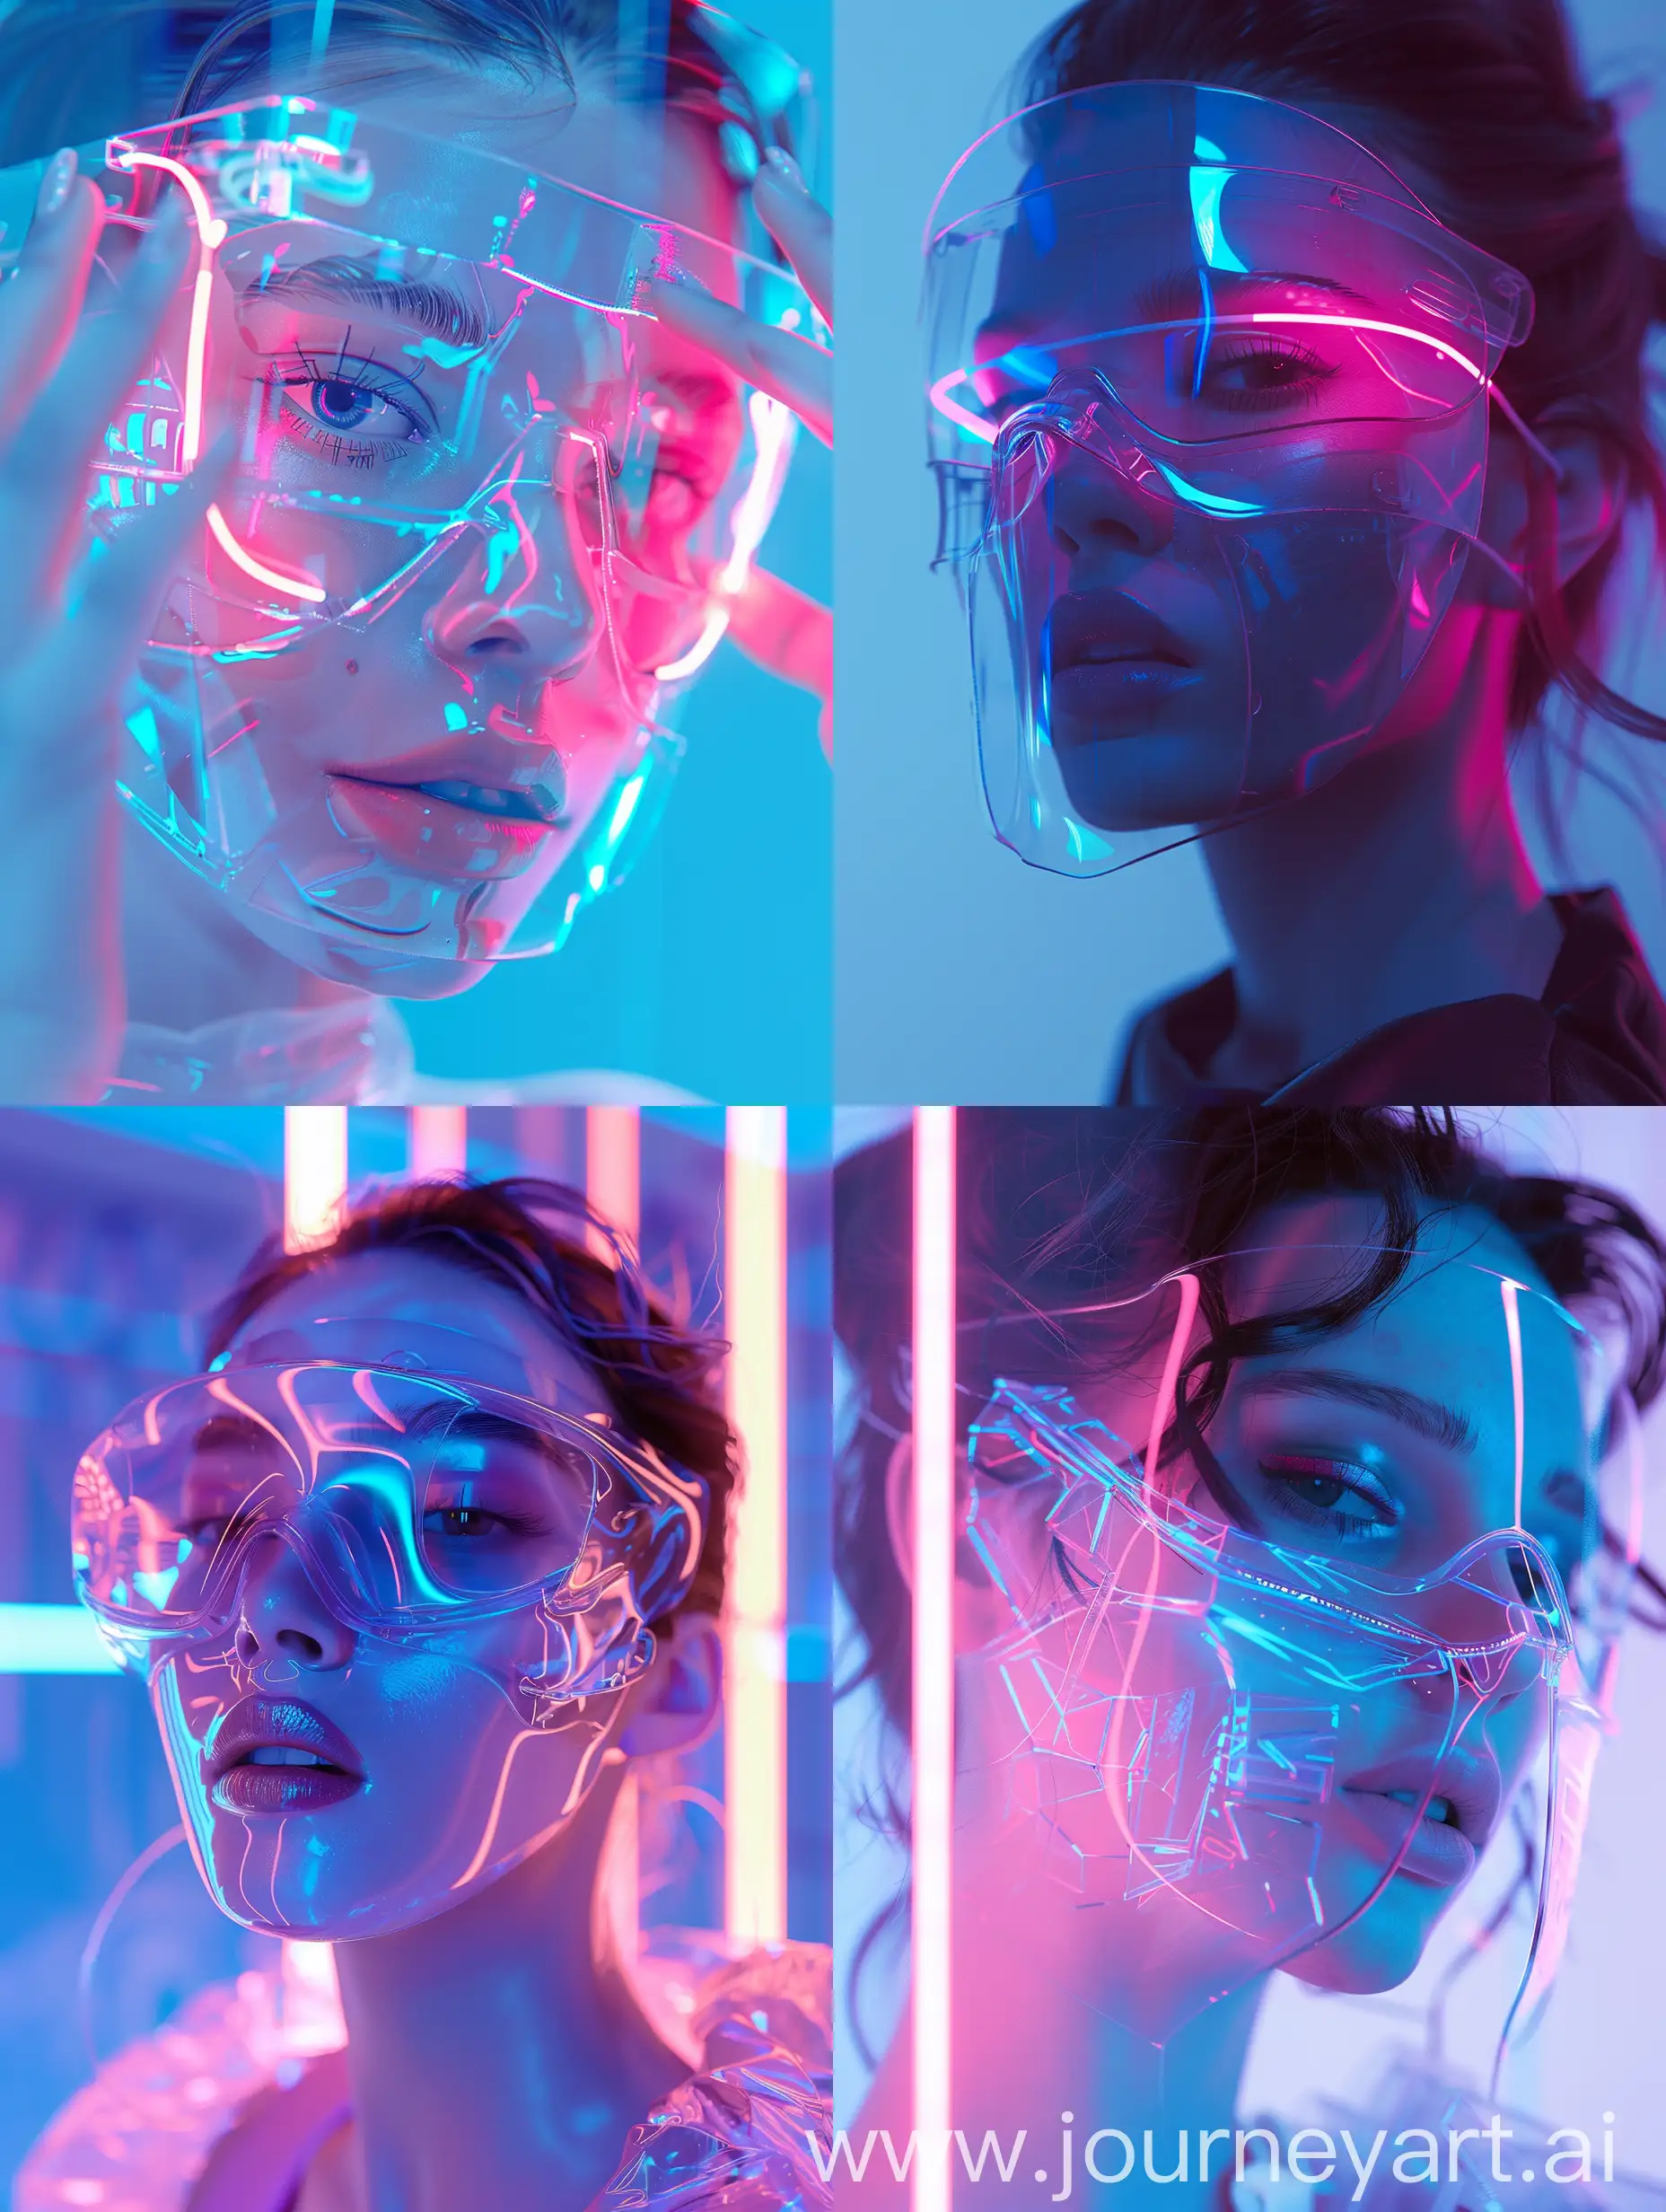 Futuristic-Cyberpunk-Woman-Wearing-Transparent-Glass-Mask-in-Neon-Lights